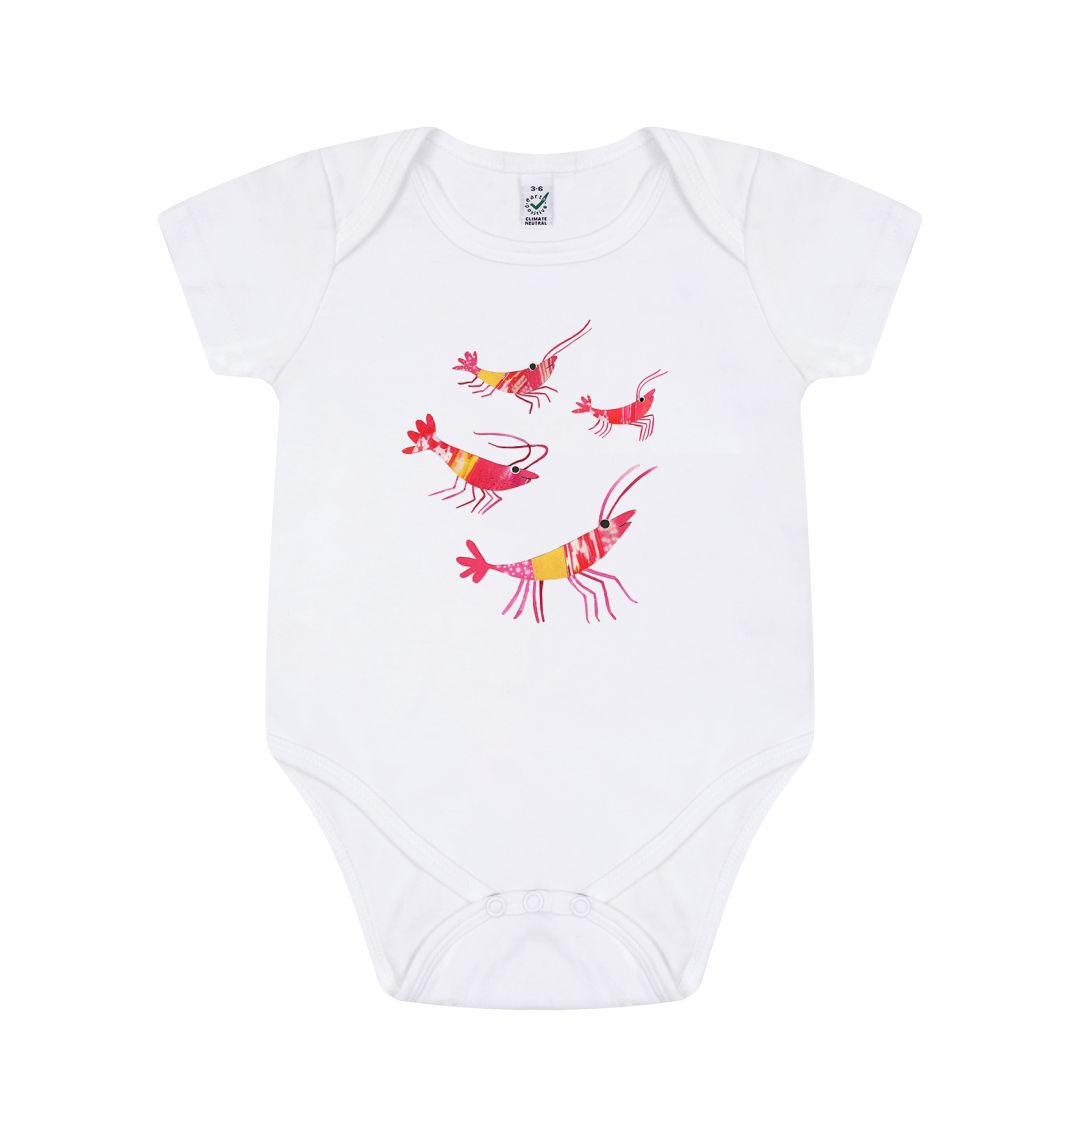 prawn party organic baby body suit - Printed Kids T-Shirt - Sarah Millin